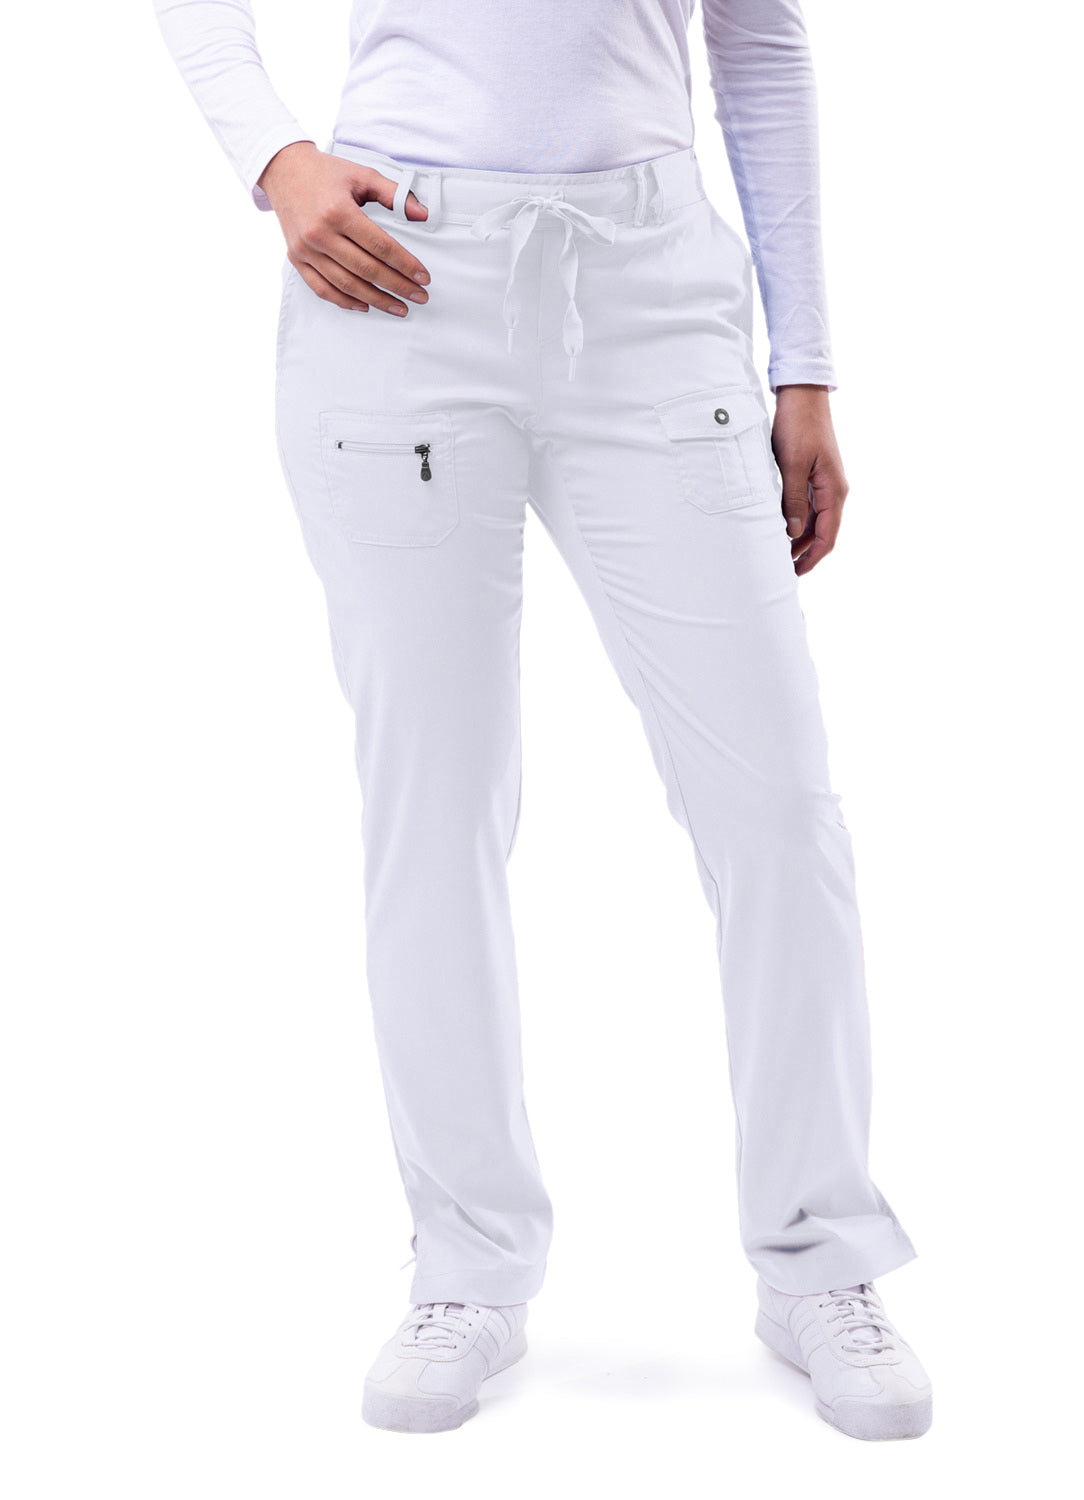 ADAR Pro Women's Slim Fit 6 Pocket Pant